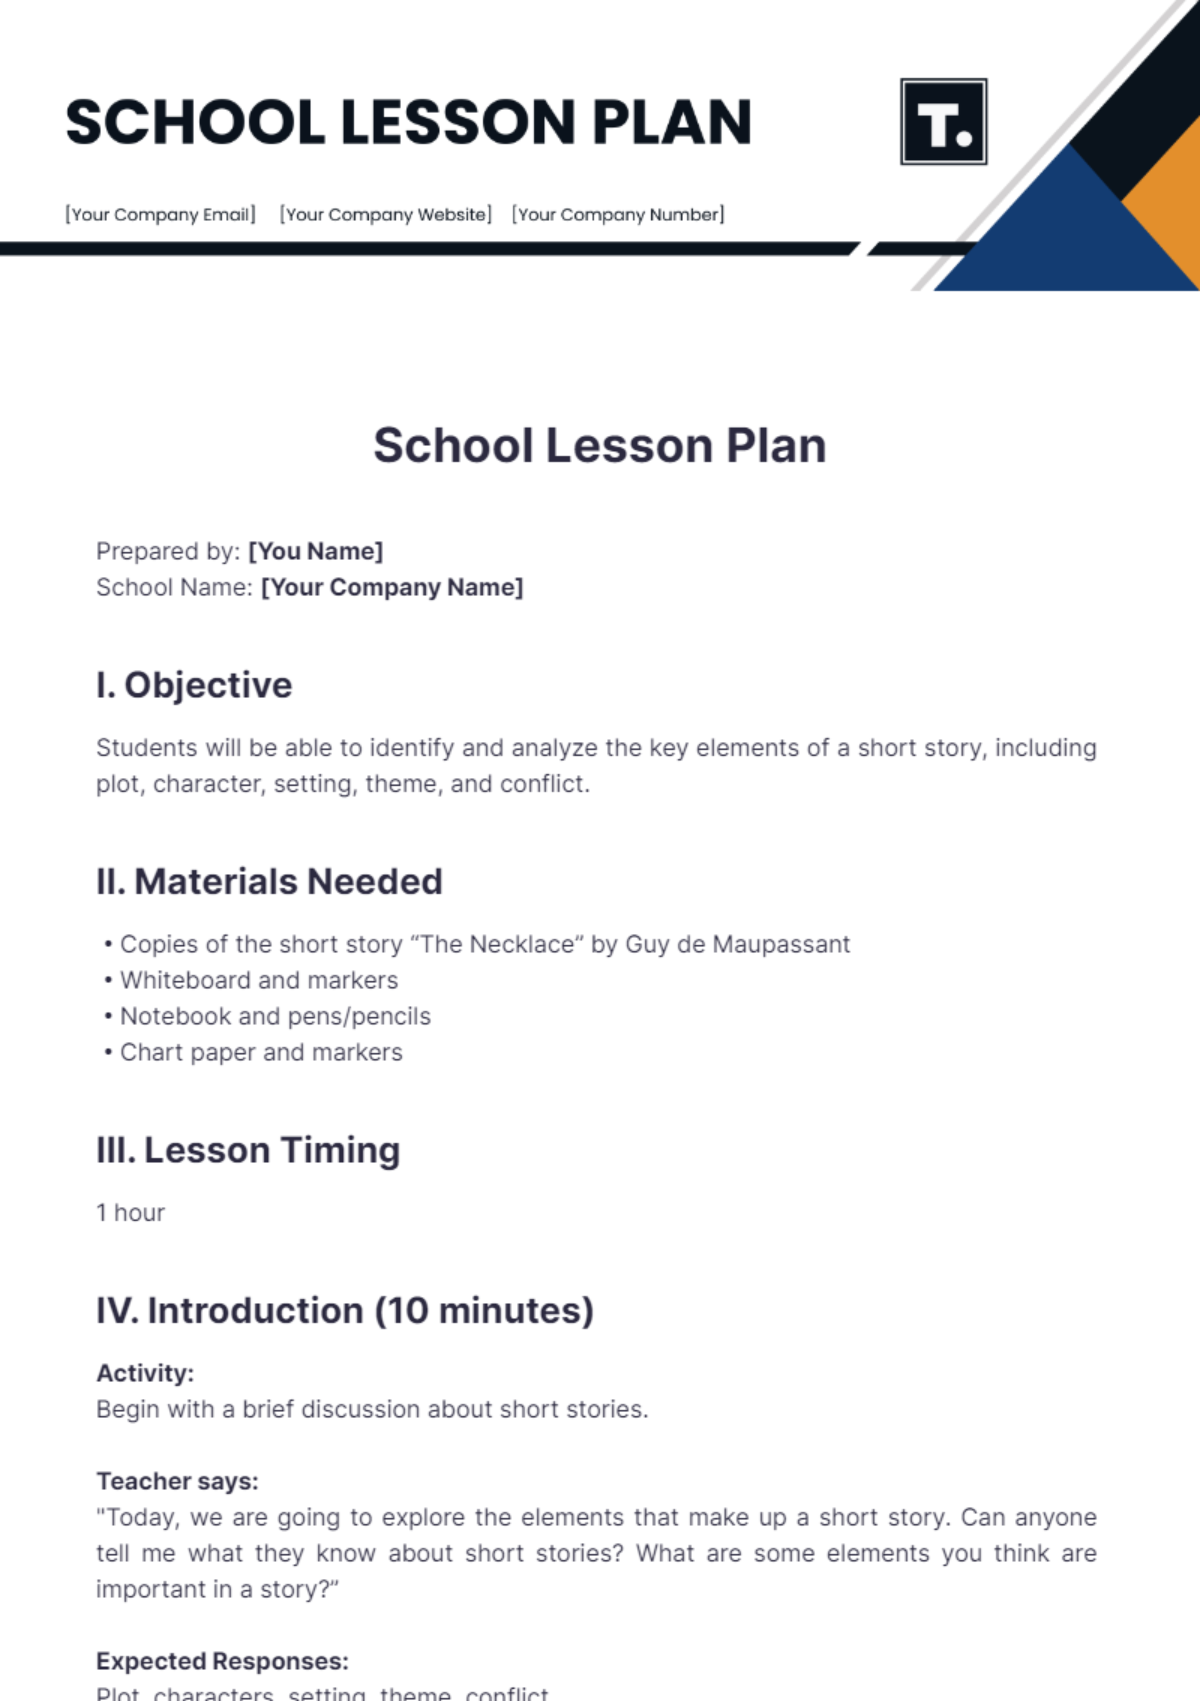 Free School Lesson Plan Template